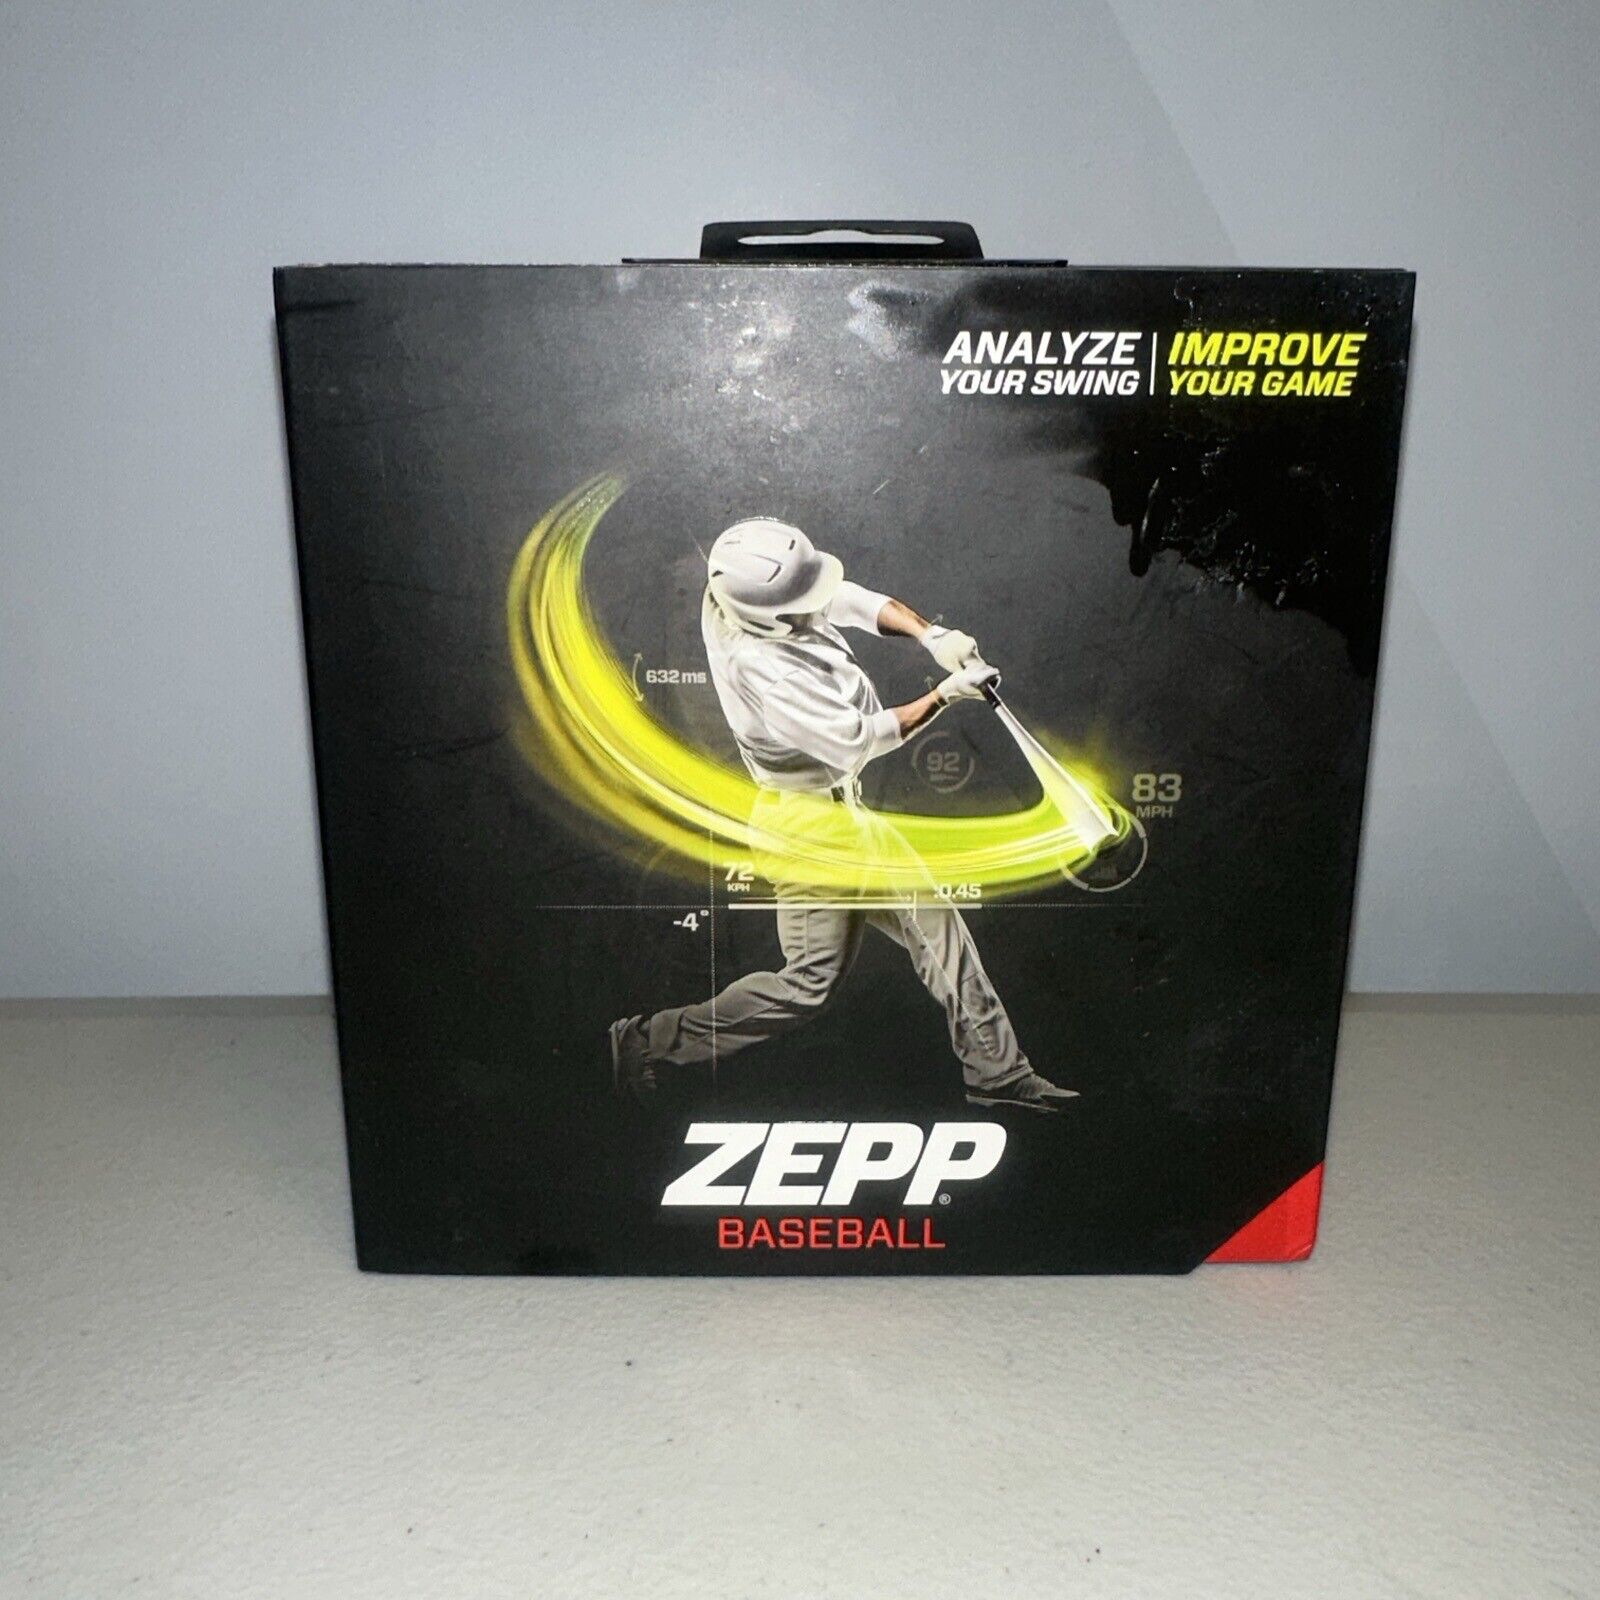 Zepp Baseball 3D Motion Sensor Wireless Swing Analyzer NEW SEALED